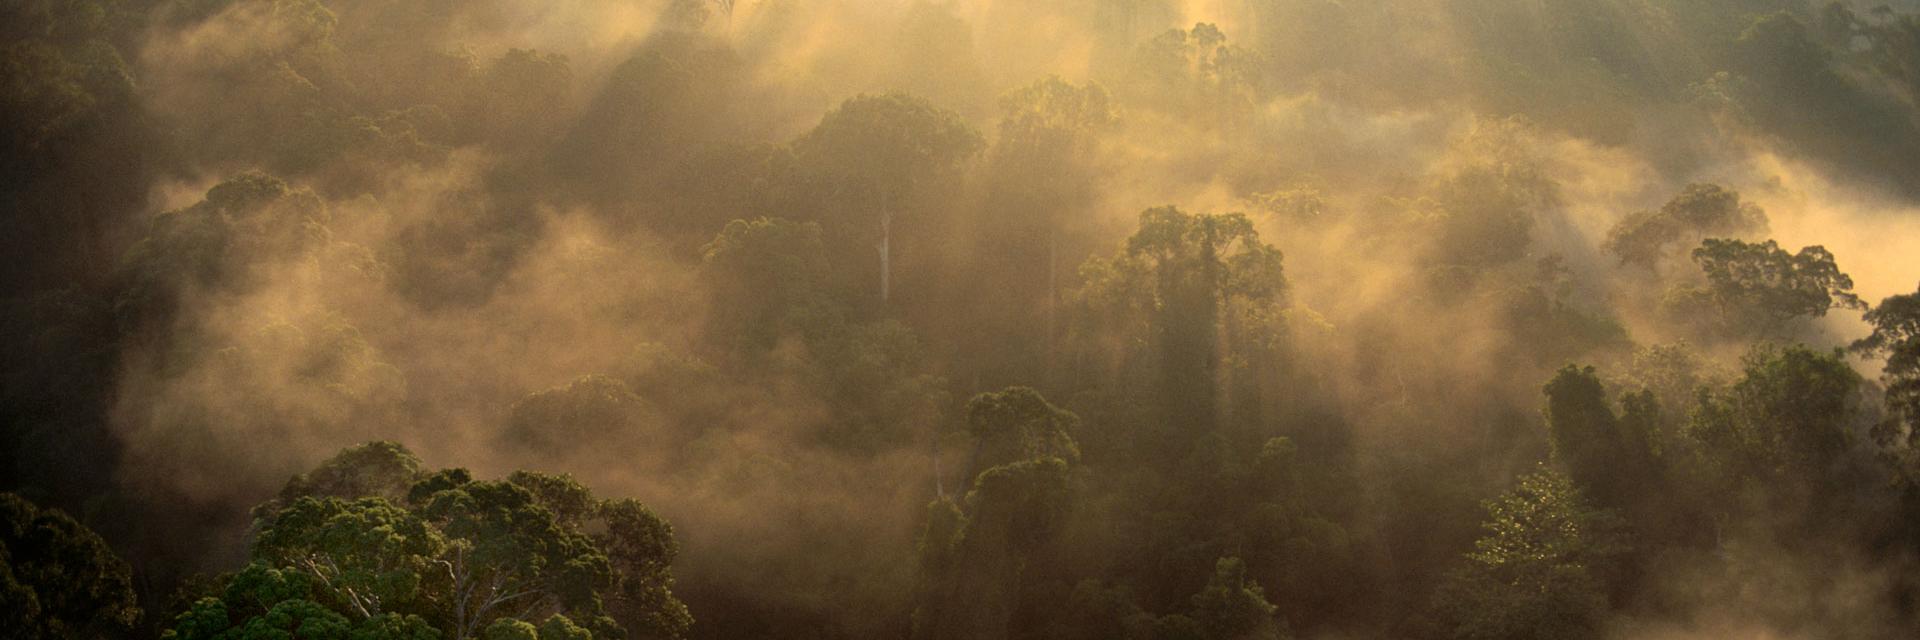 Sunrise over lowland rainforest in the Danum Valley in Borneo.